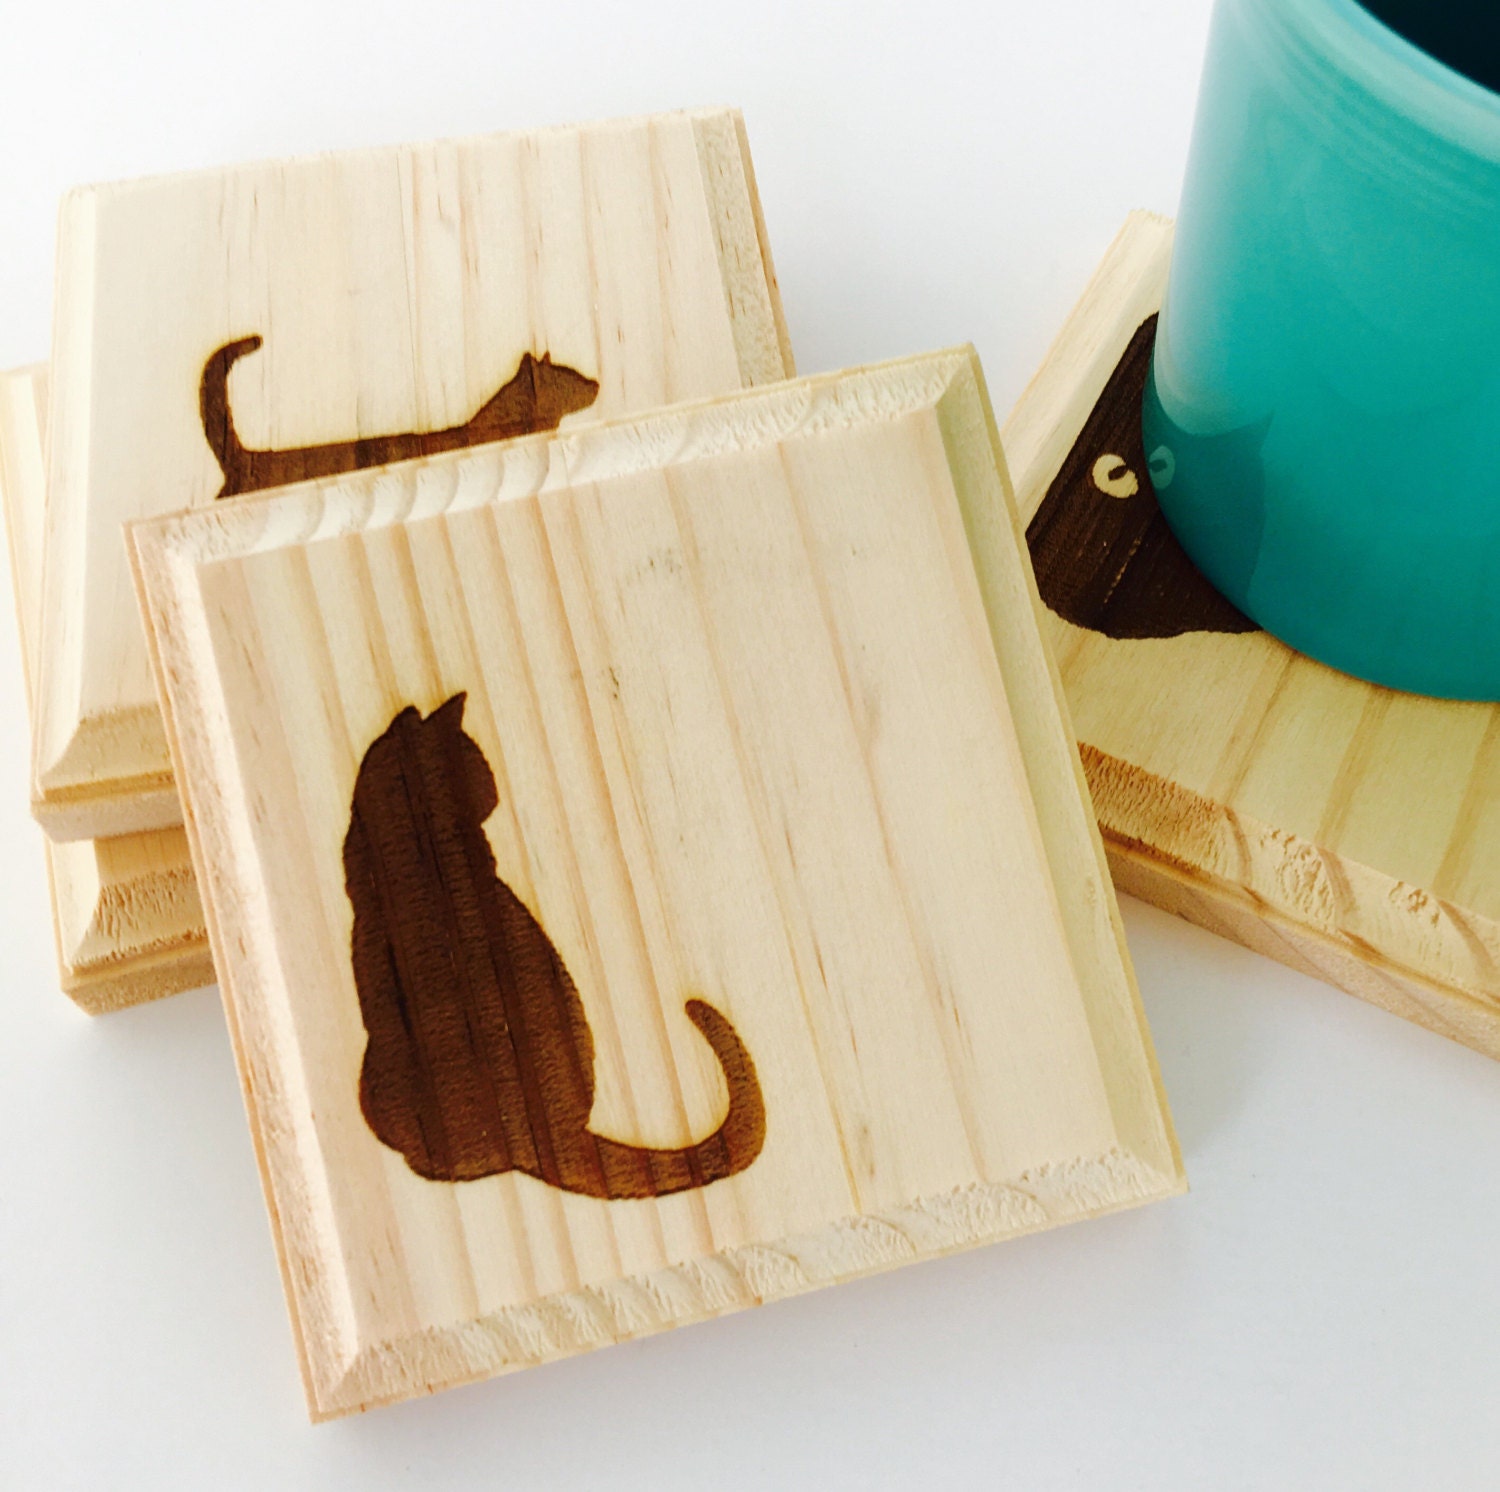 Zig Zag' - Personalized Cat Coasters (Set of 4)